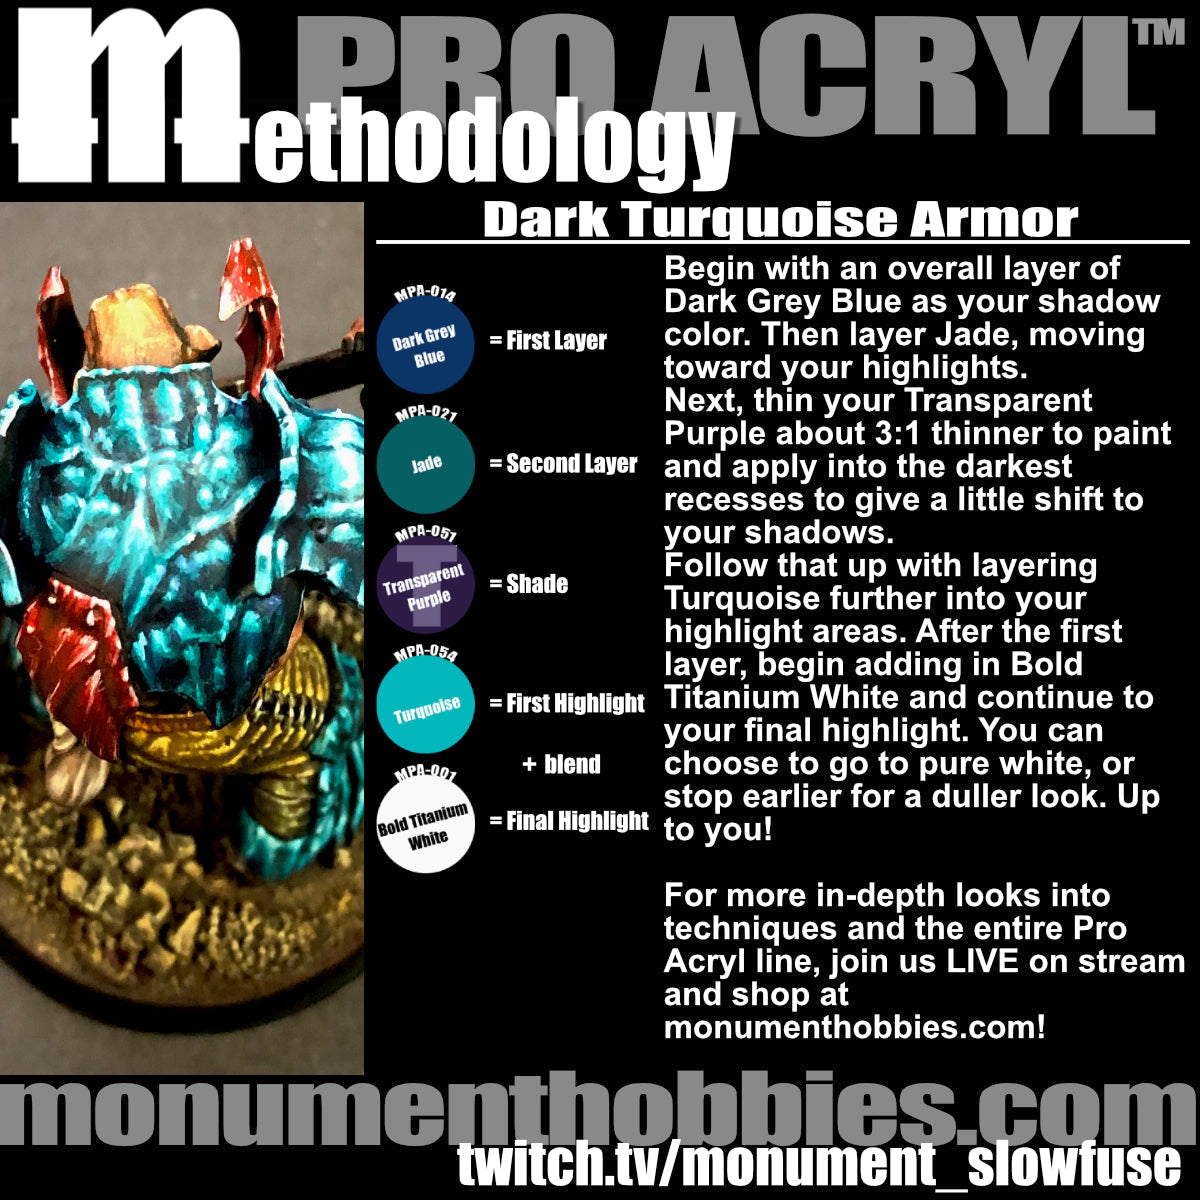 Methodology #23 - Dark Turquoise Armor!